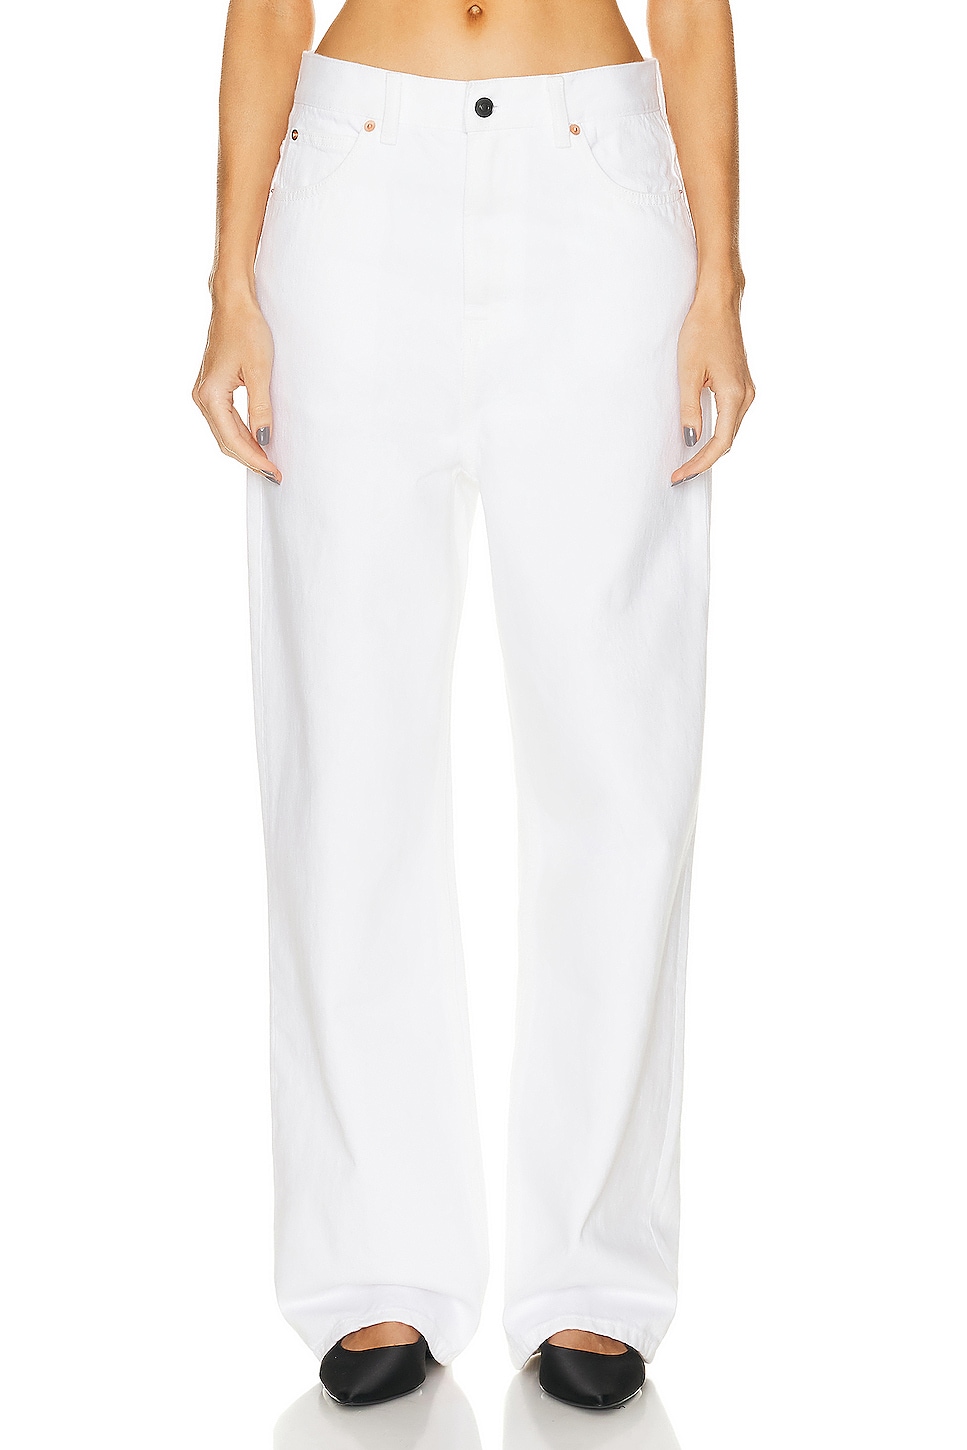 Image 1 of WARDROBE.NYC Denim Low Rise Jean in White